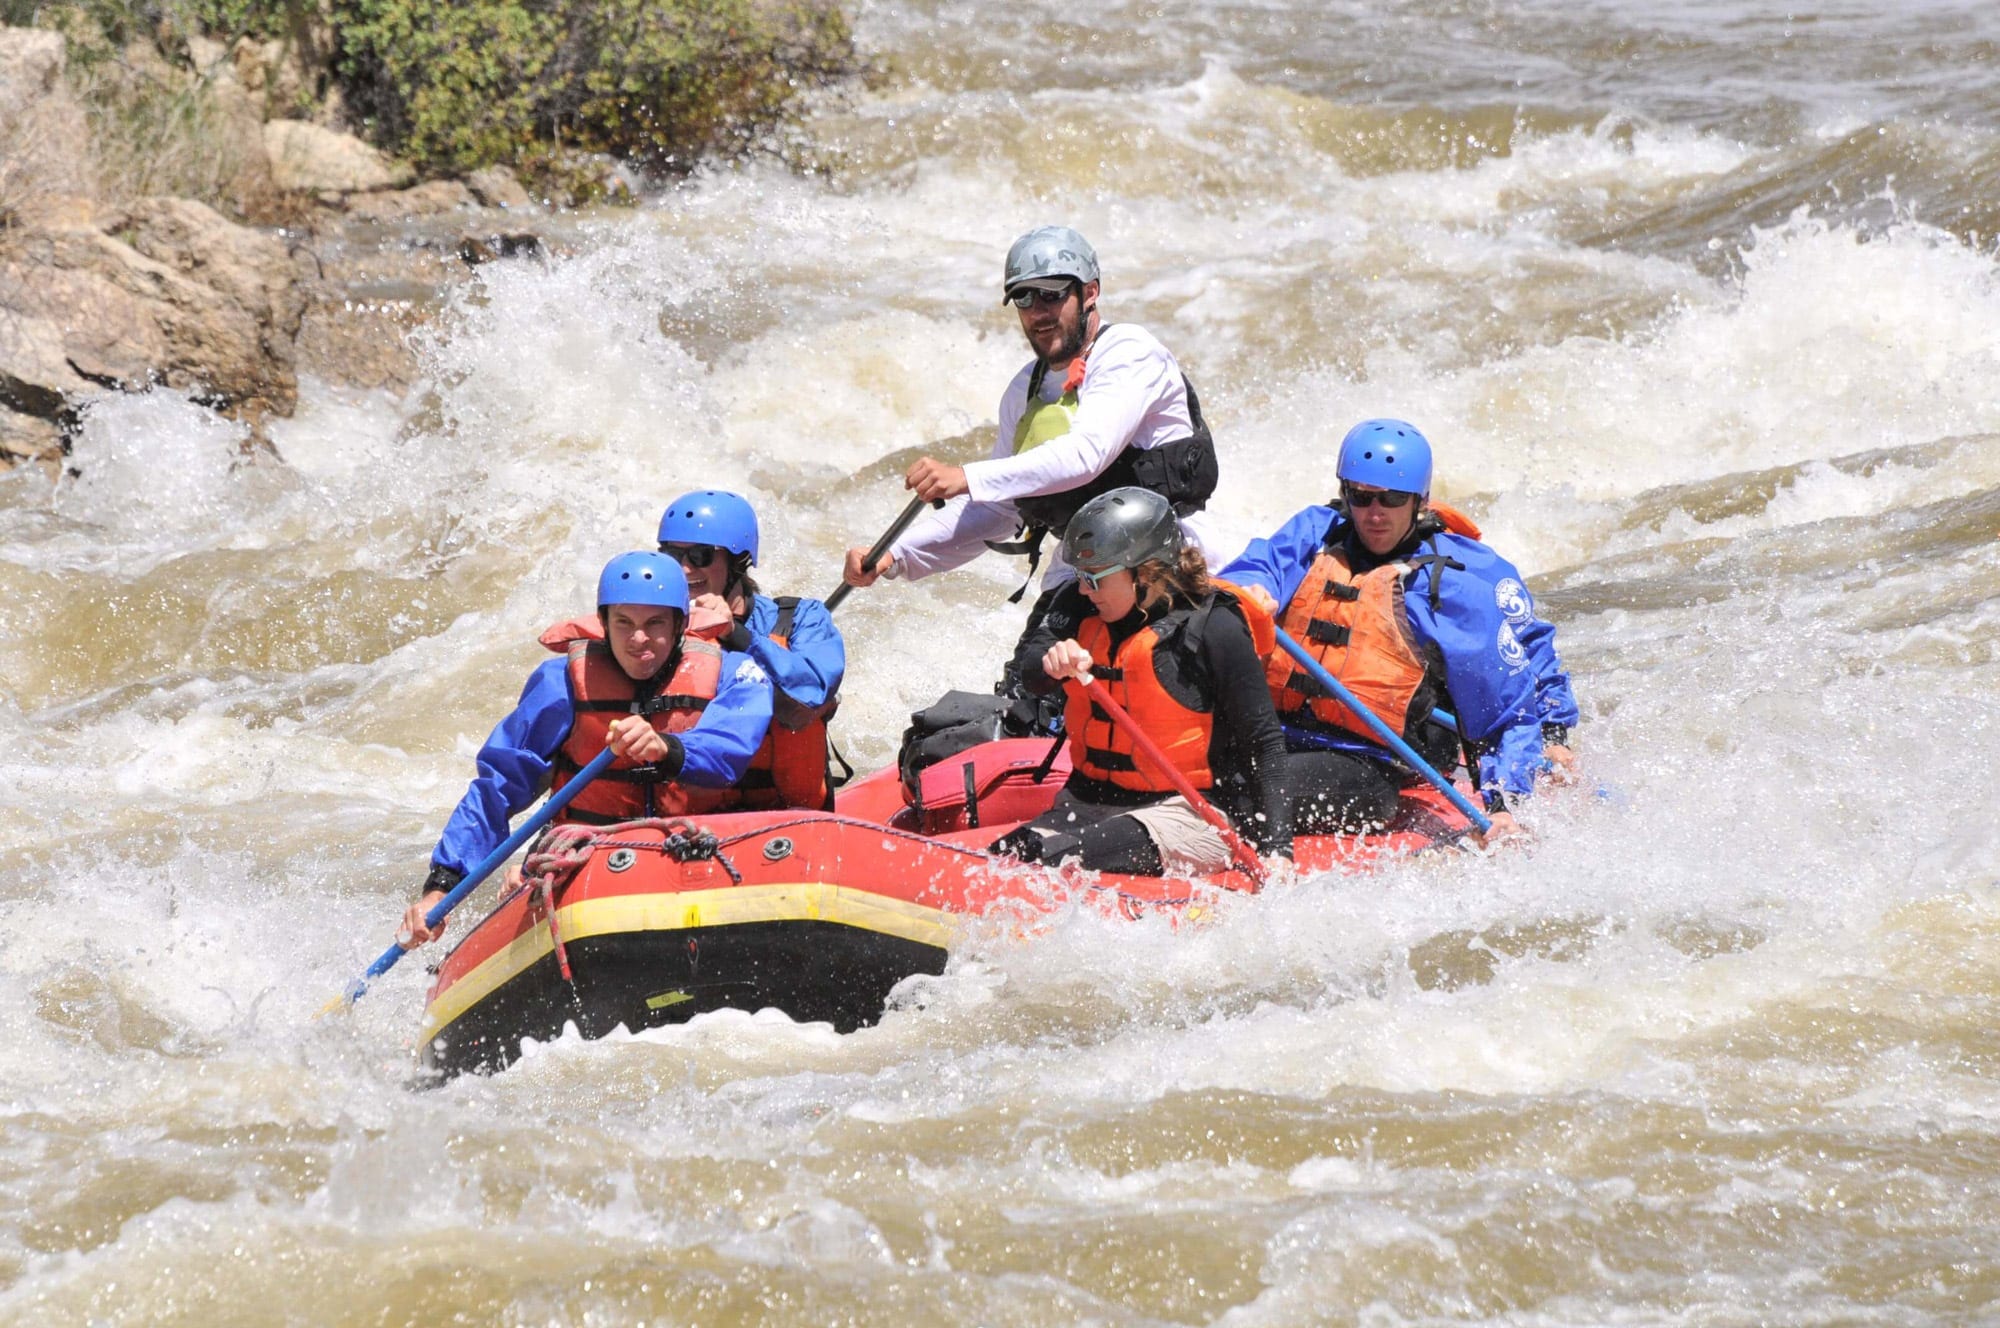 Groups river rafting in Breckenridge, Colorado